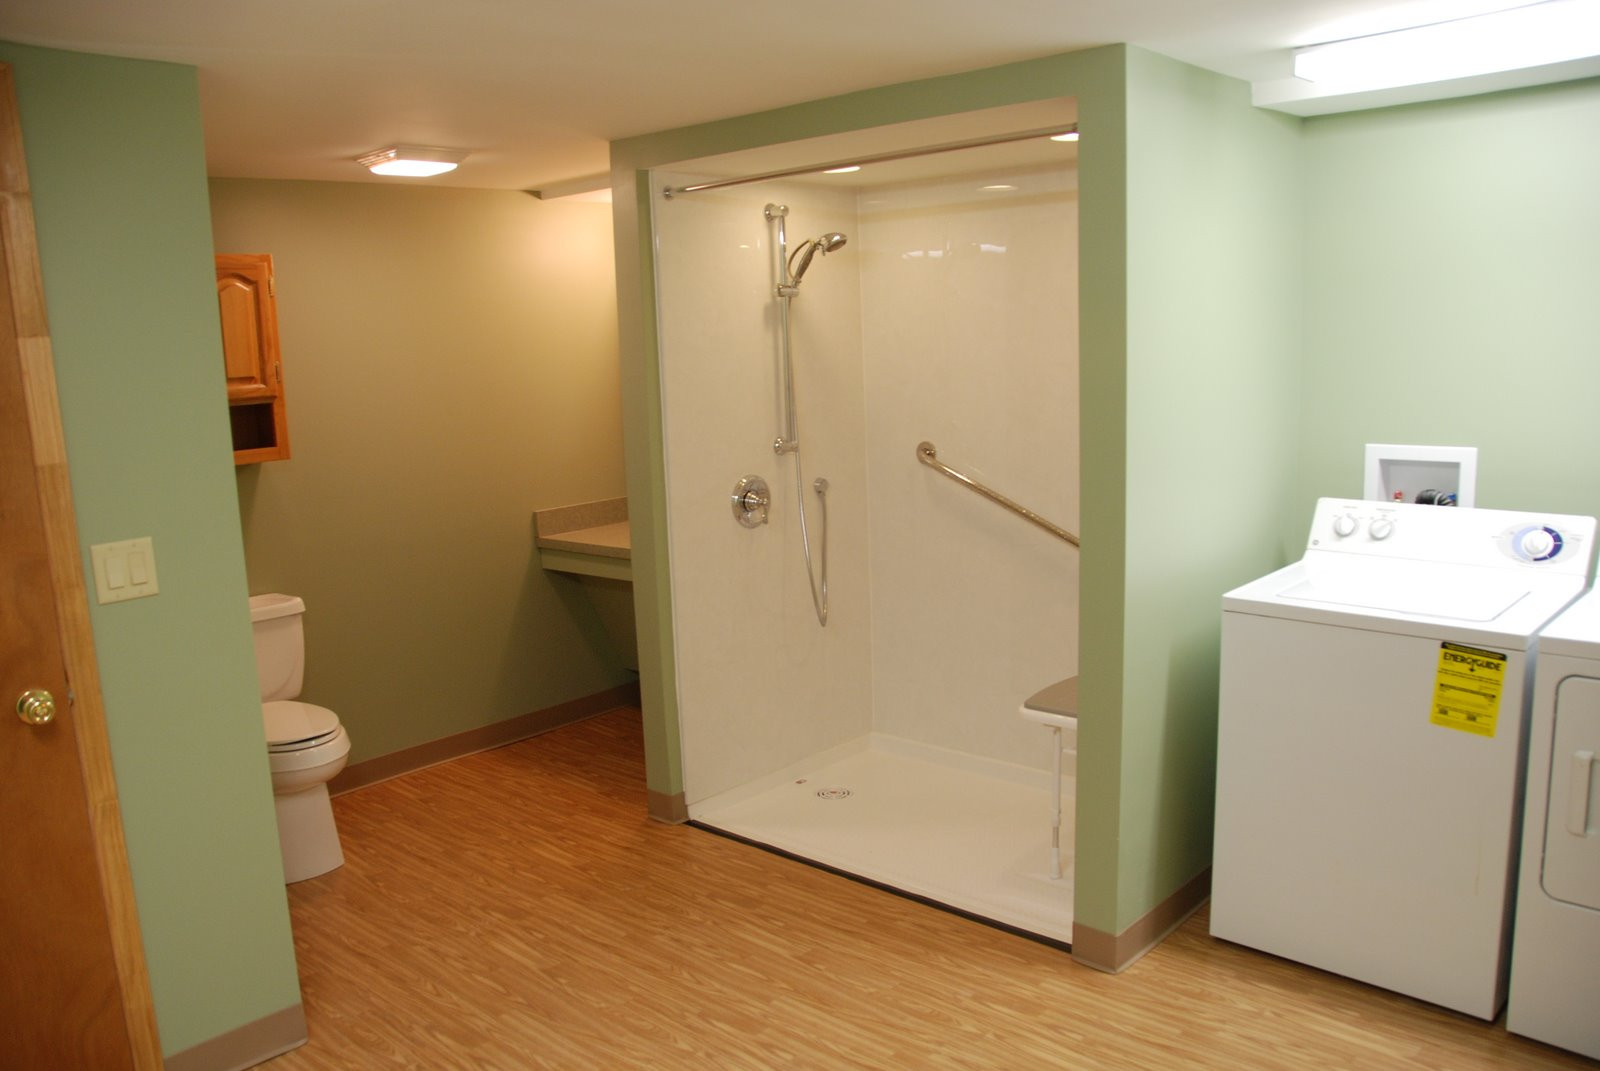 Basement Bathroom Design
 Basement Bathroom Ideas for Attractive Looking Interior